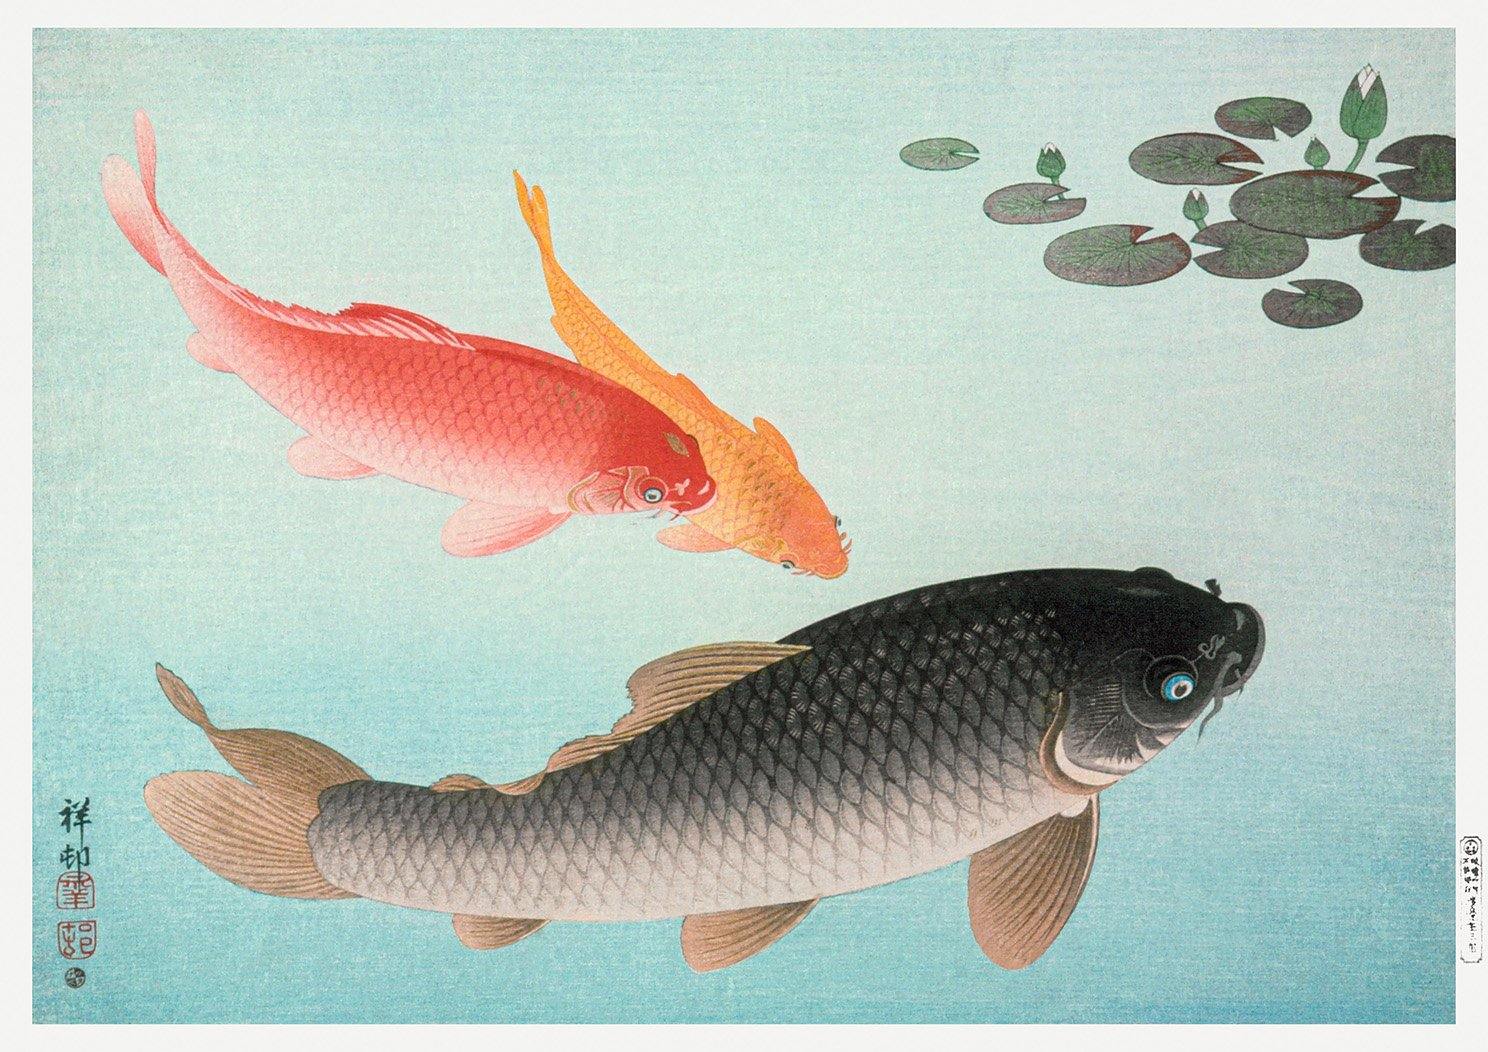 KOI CARP PRINT: Vintage Japanese Fish Illustration by Ohara Koson - Pimlico Prints